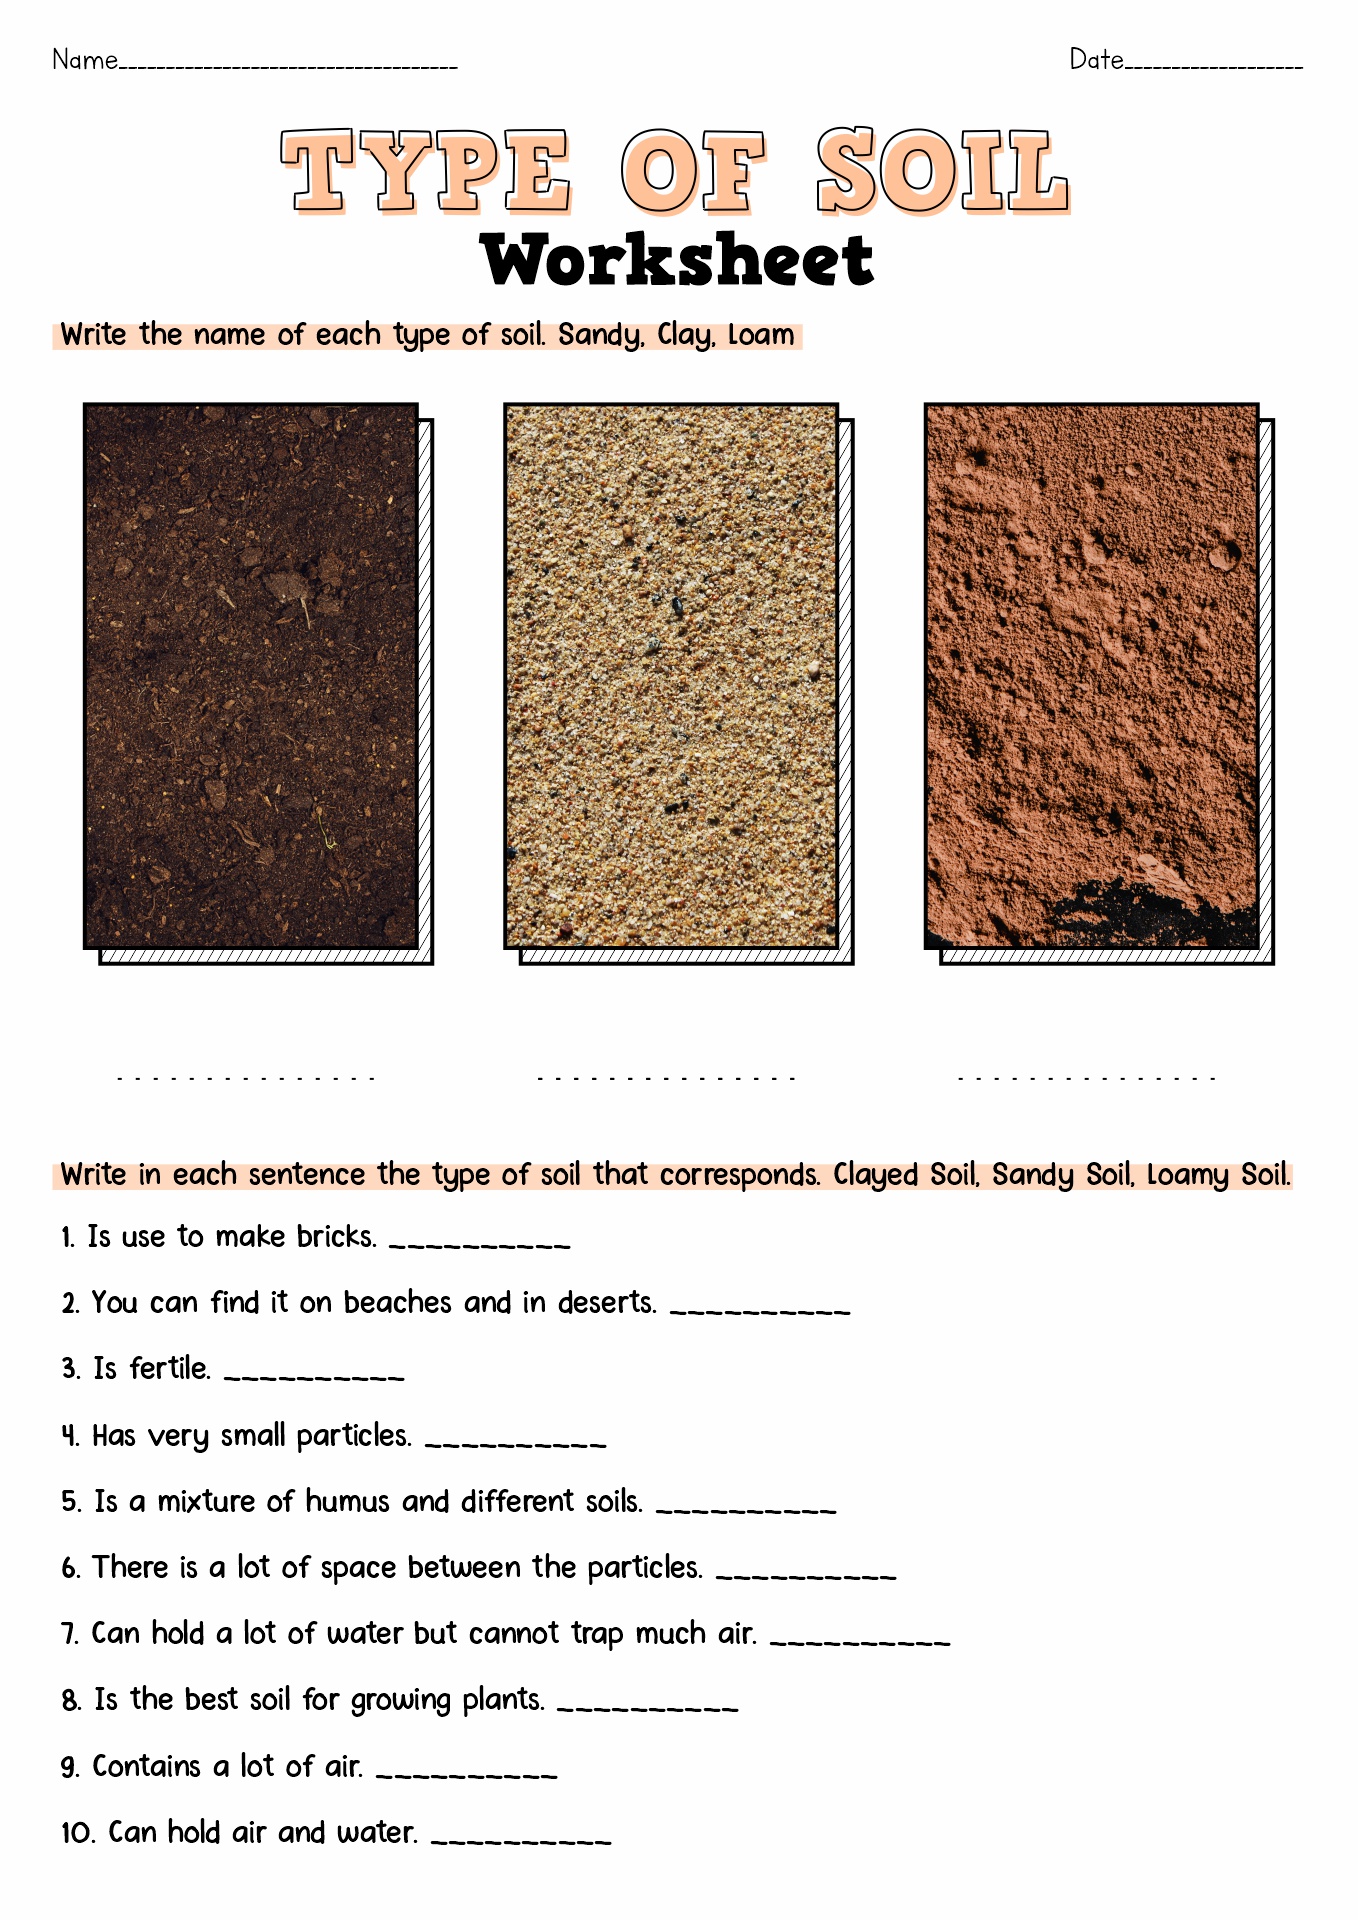 Types of Soil Worksheets for 3rd Grade Image